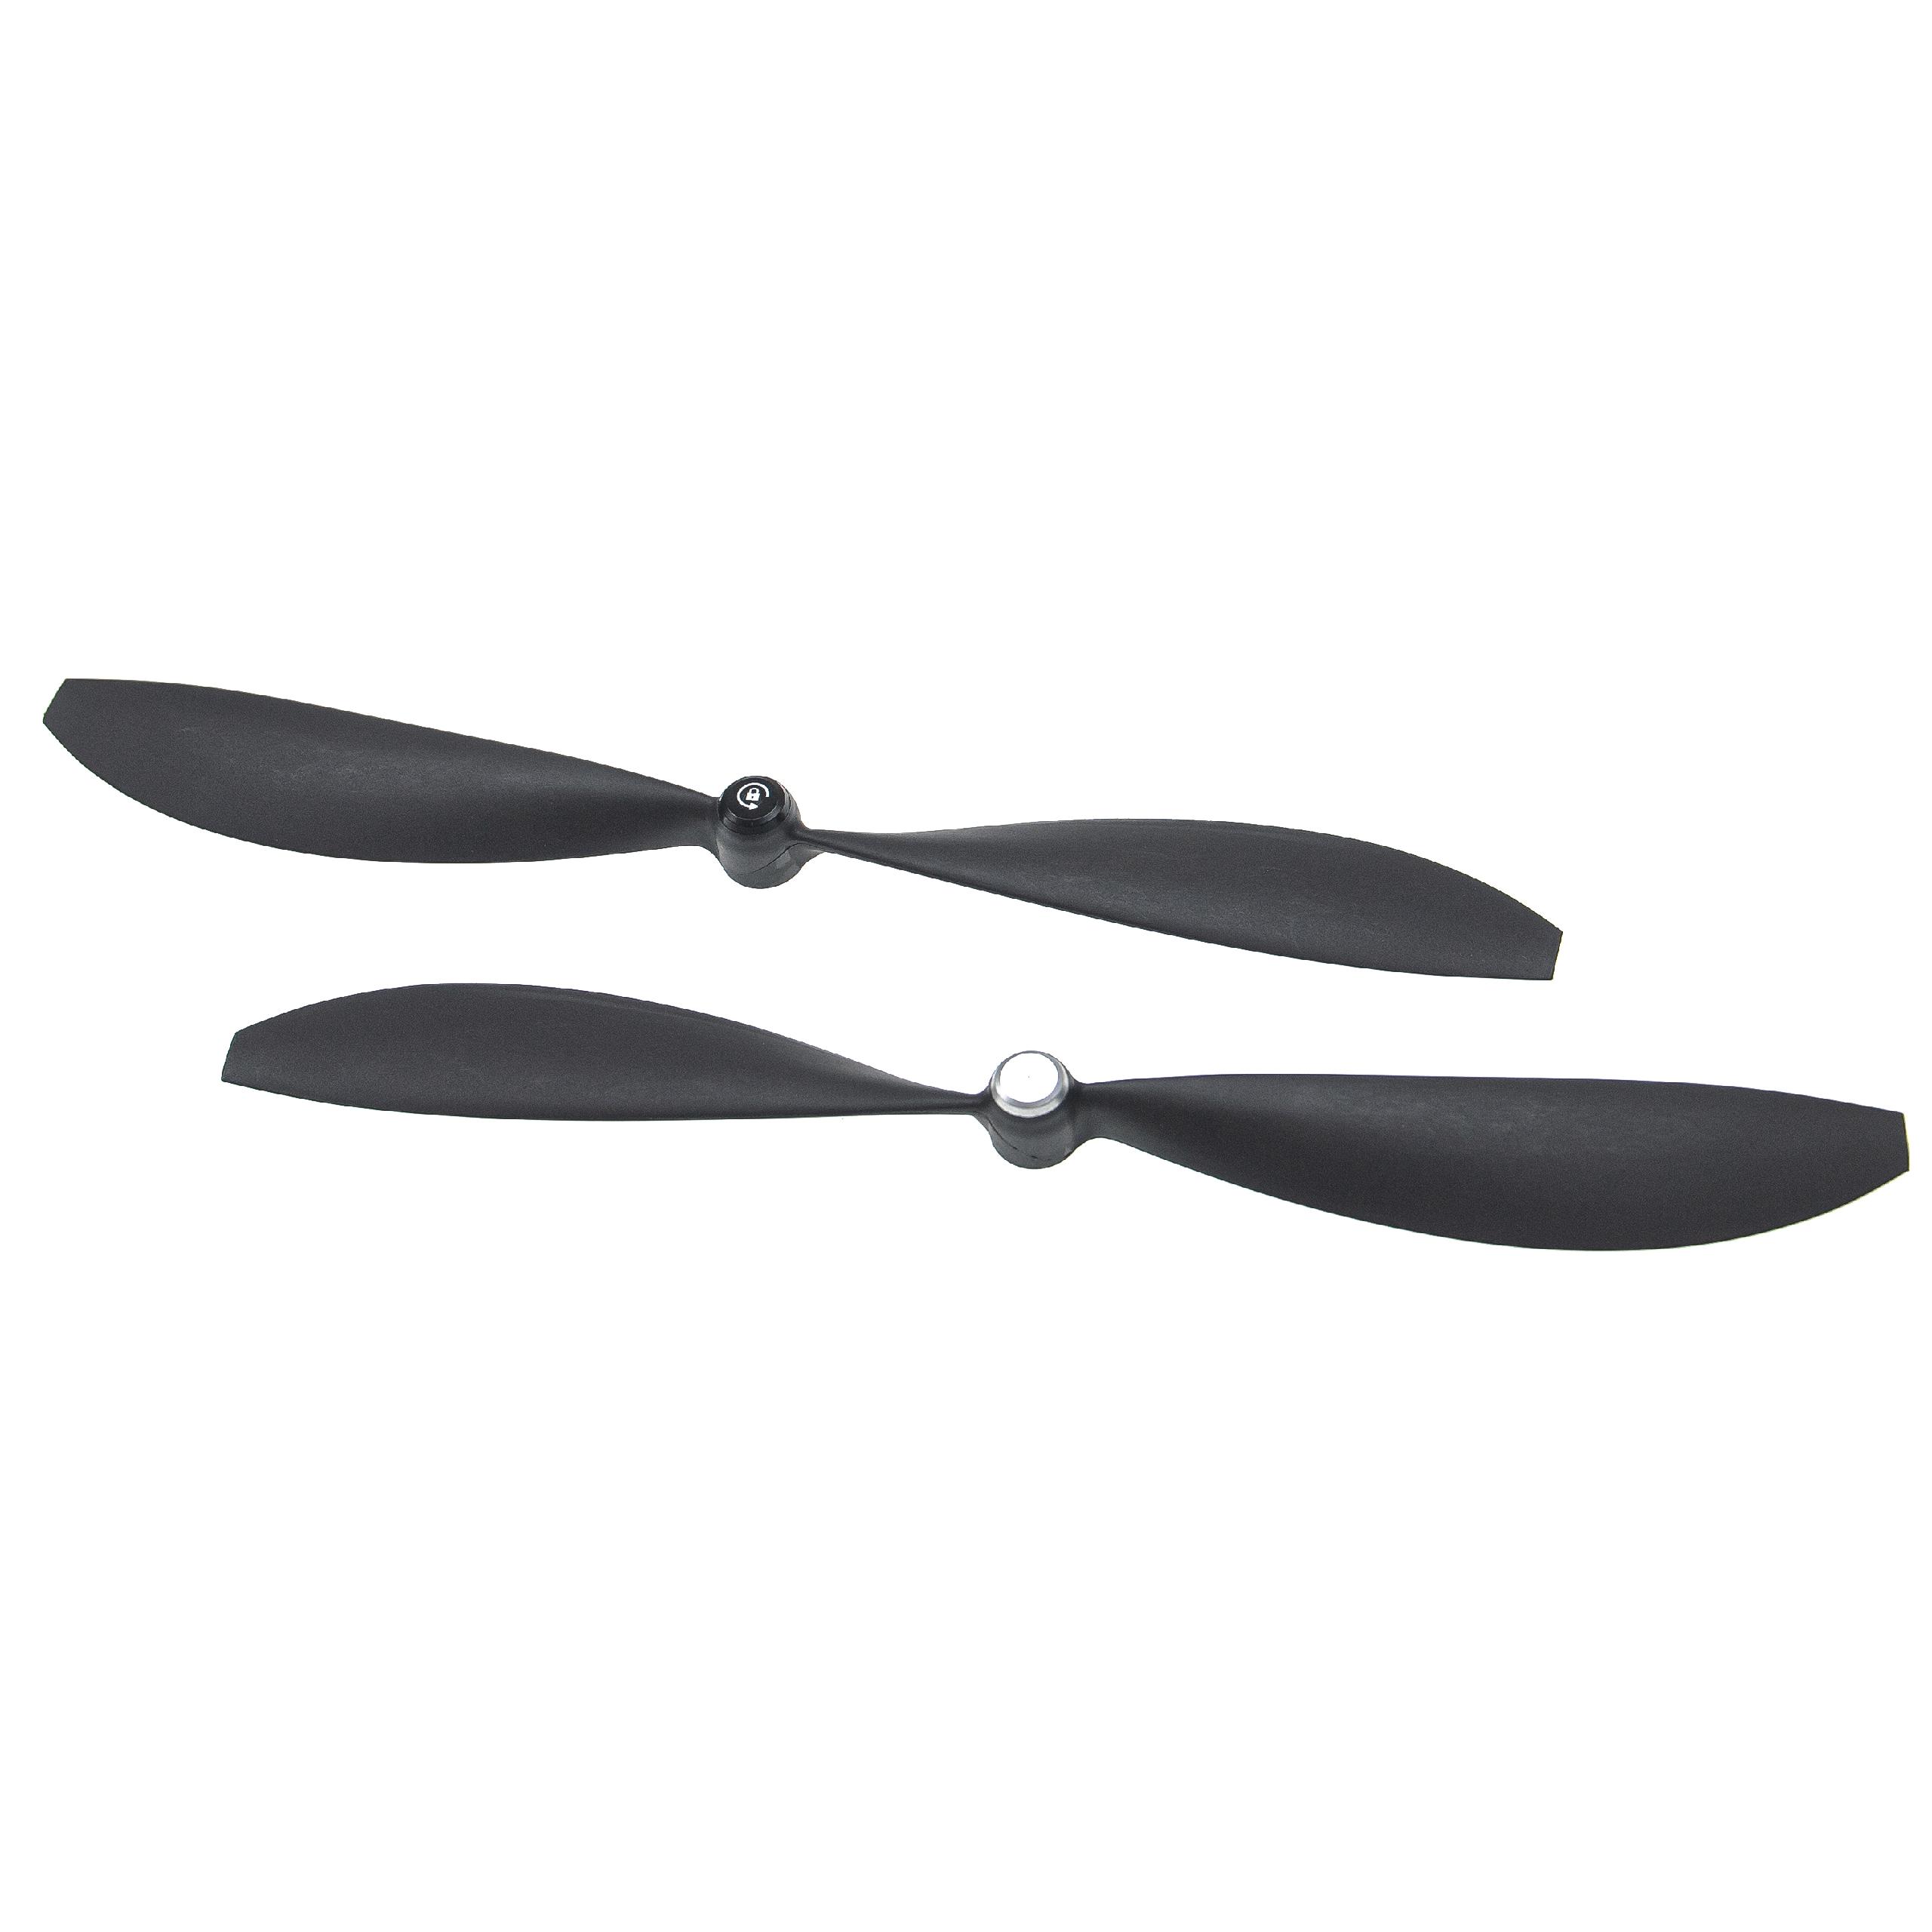 2x Propeller suitable for GoPro Karma Drone - Self-Locking, Black